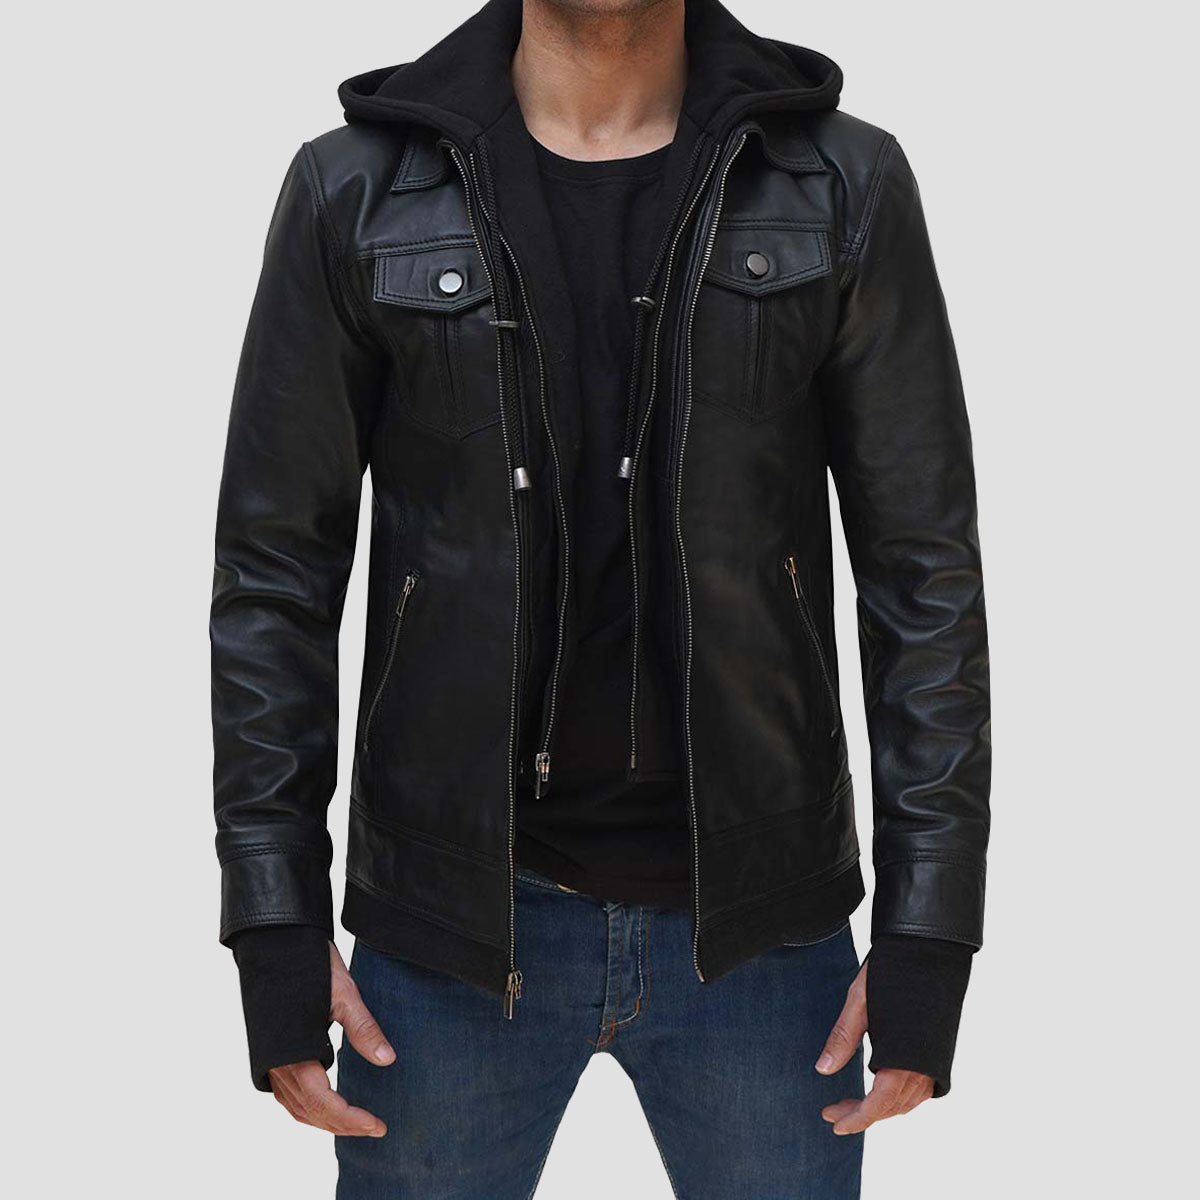 Apollo Bomber Black Leather Jacket with Hood